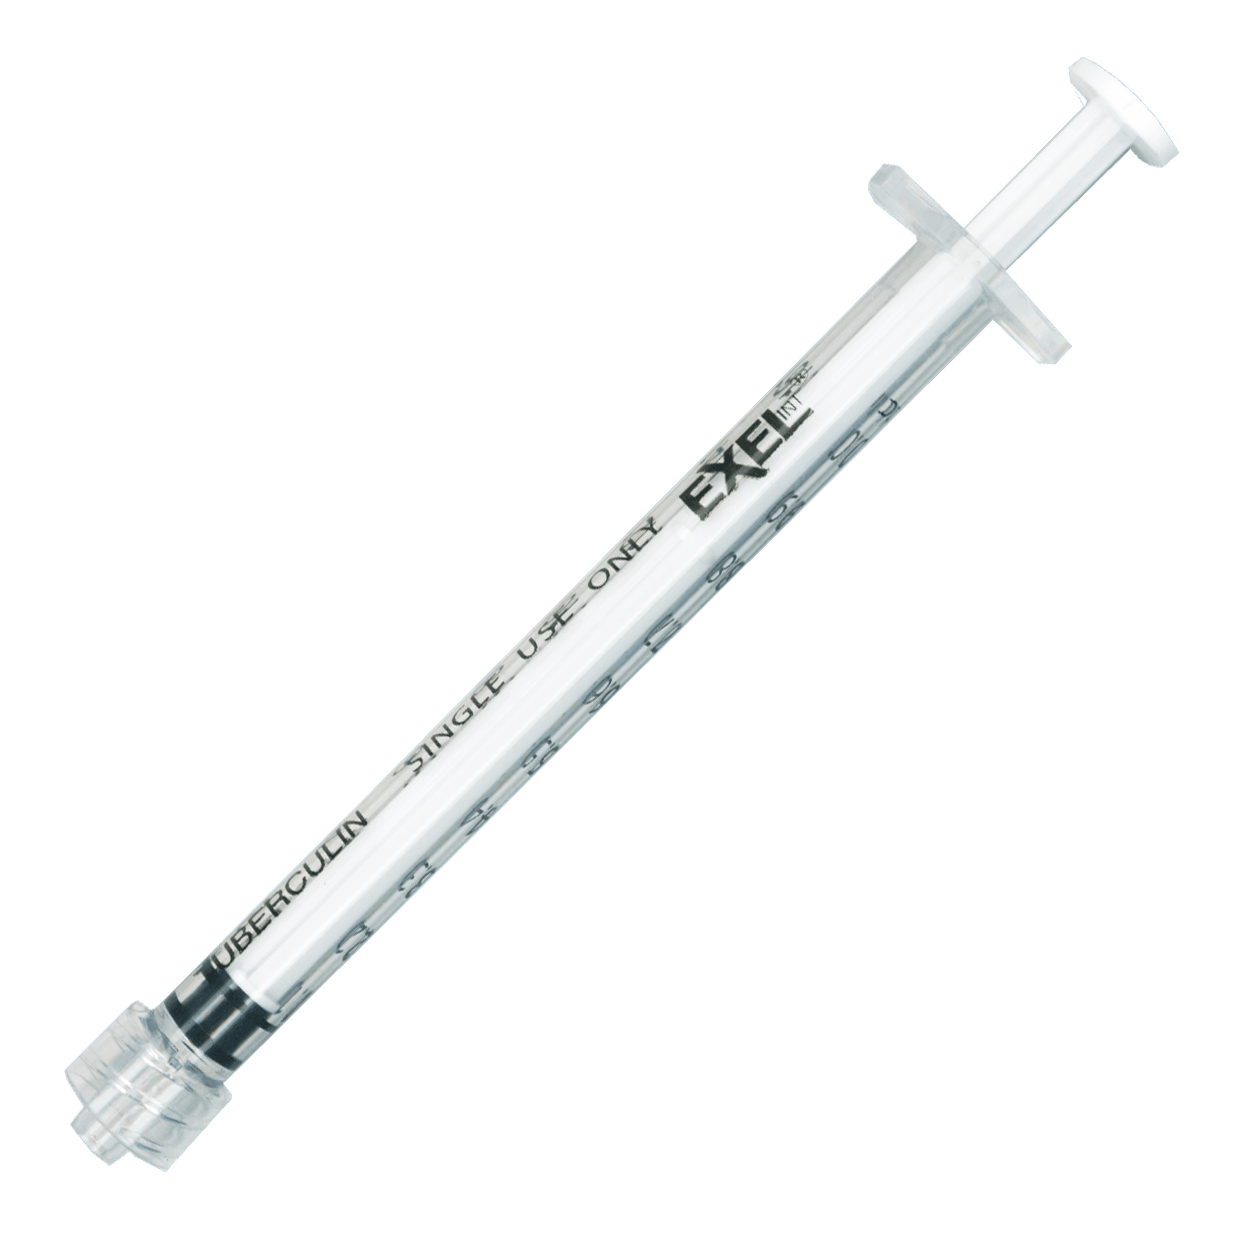 BD 1cc TB Syringe Only Luer Lock - Box of 100